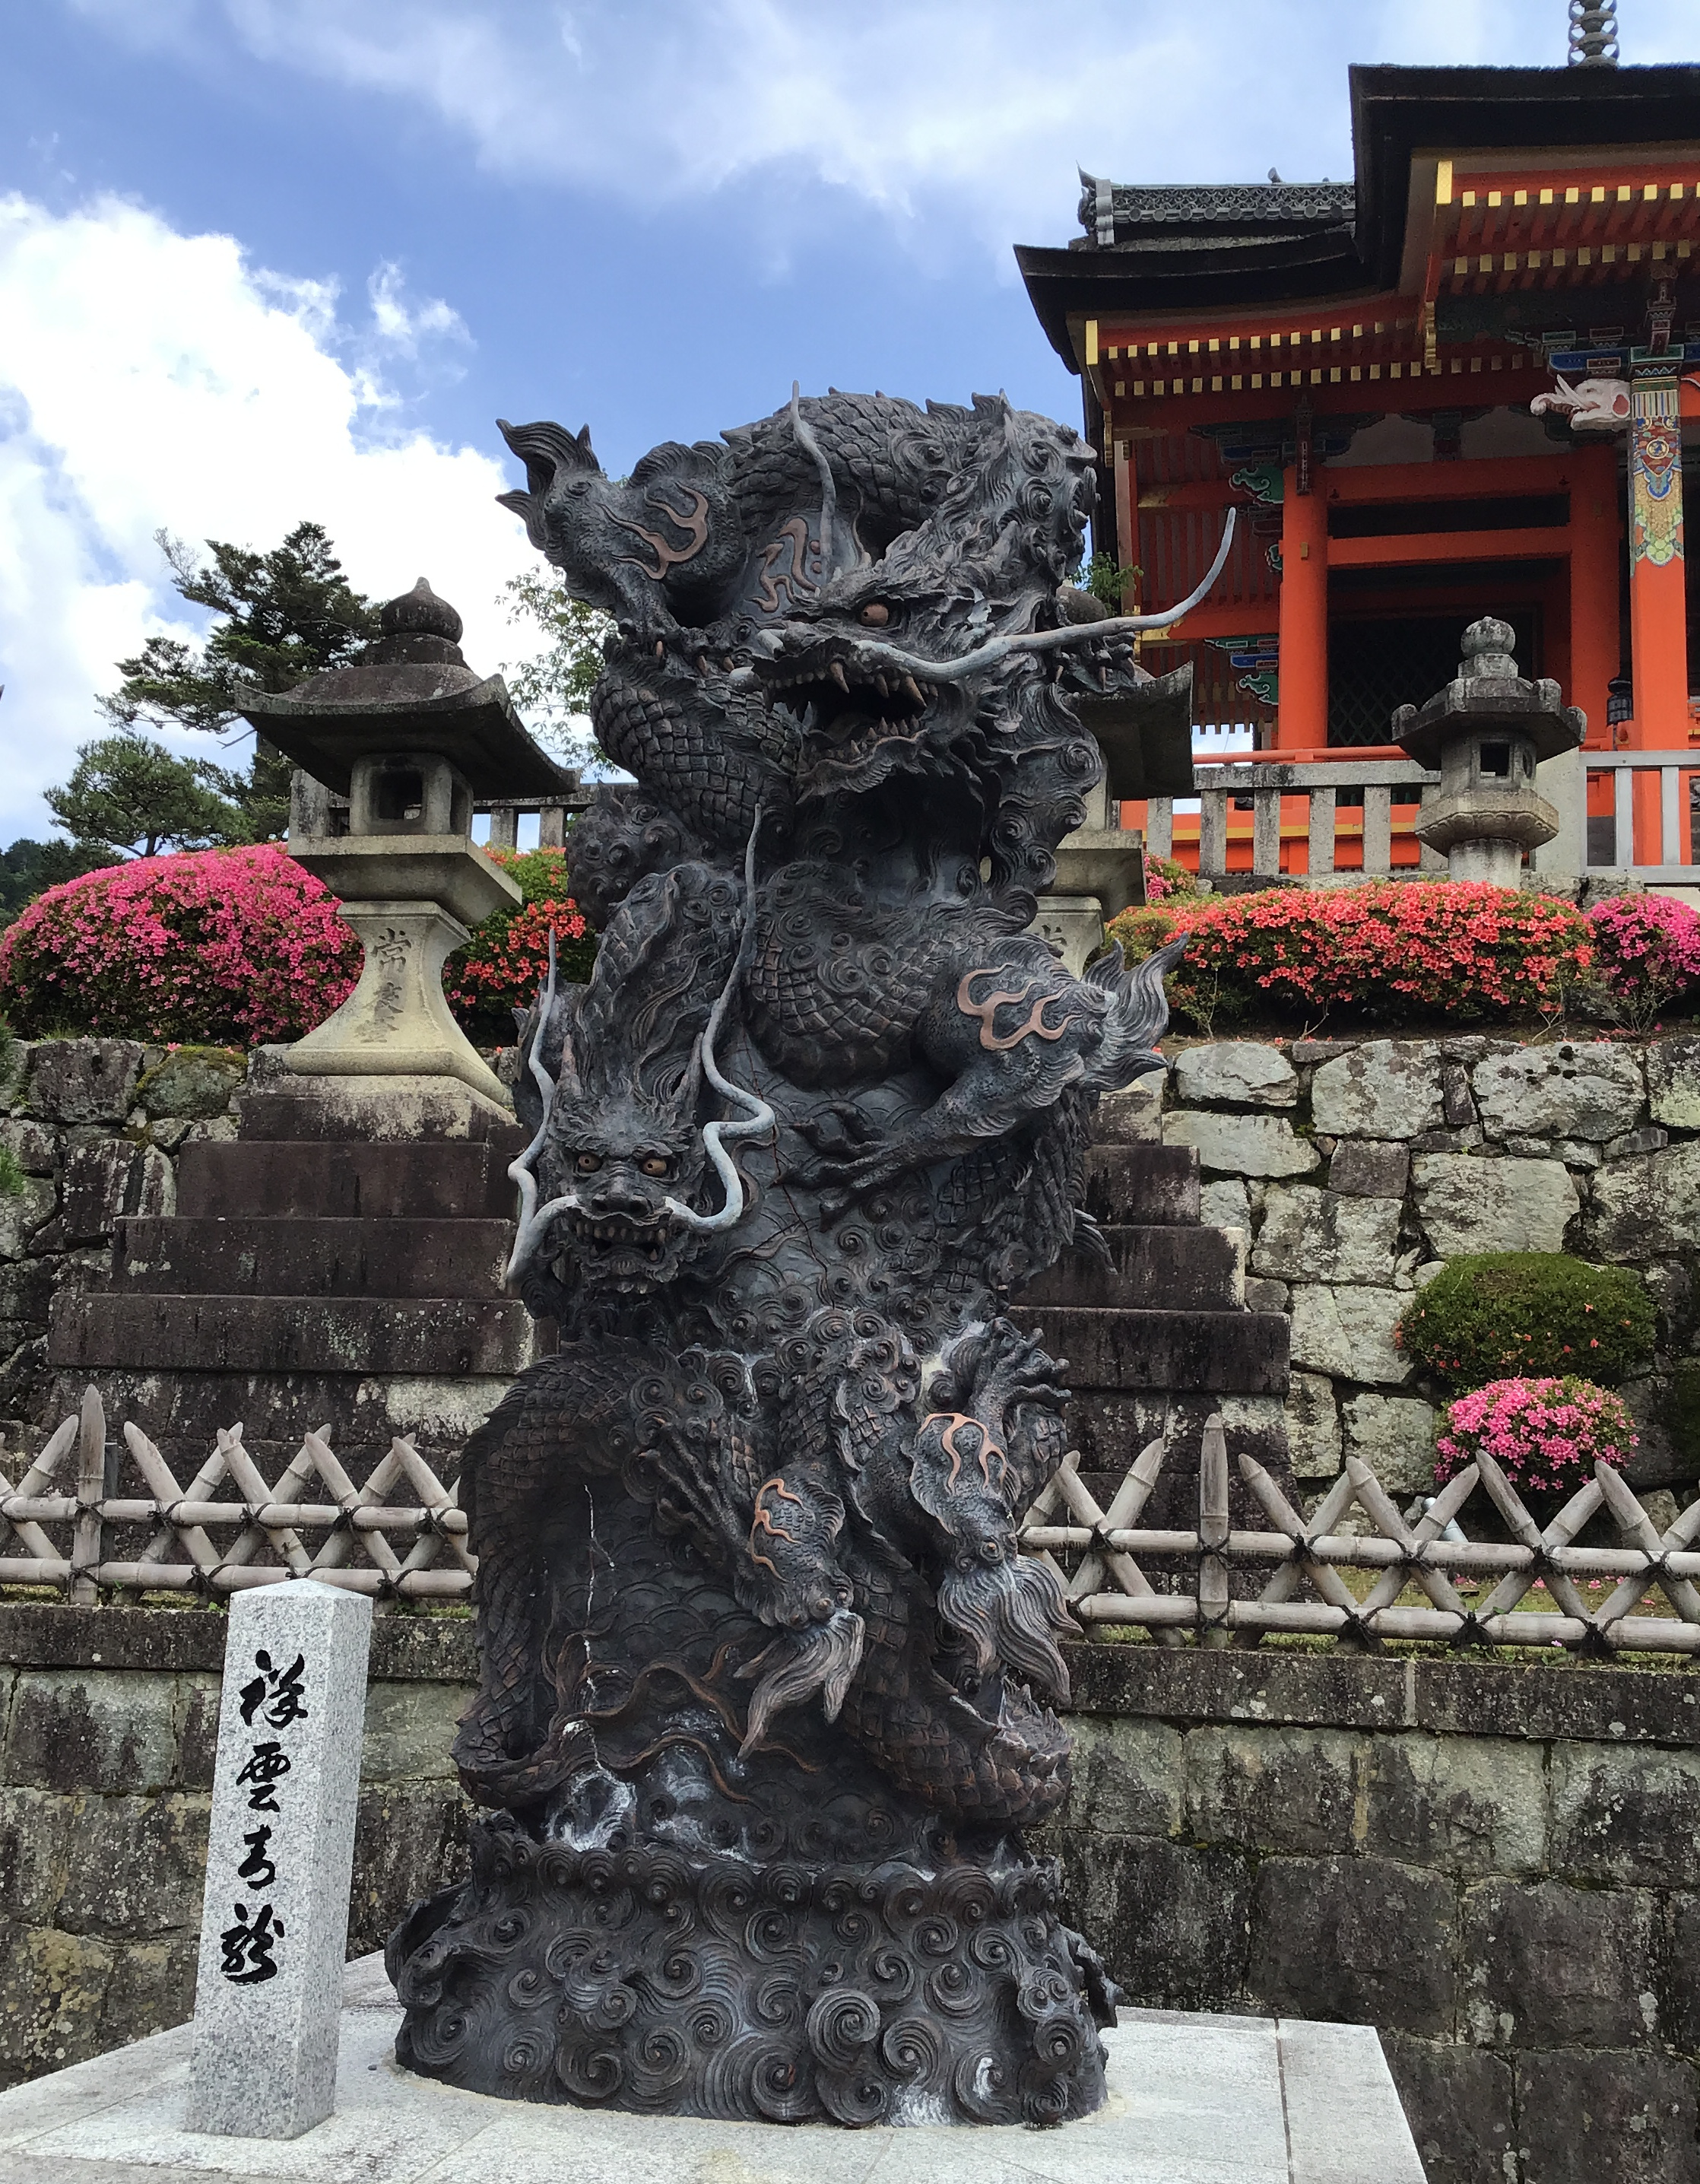 A statue of a dragon at Kiyomizu Temple